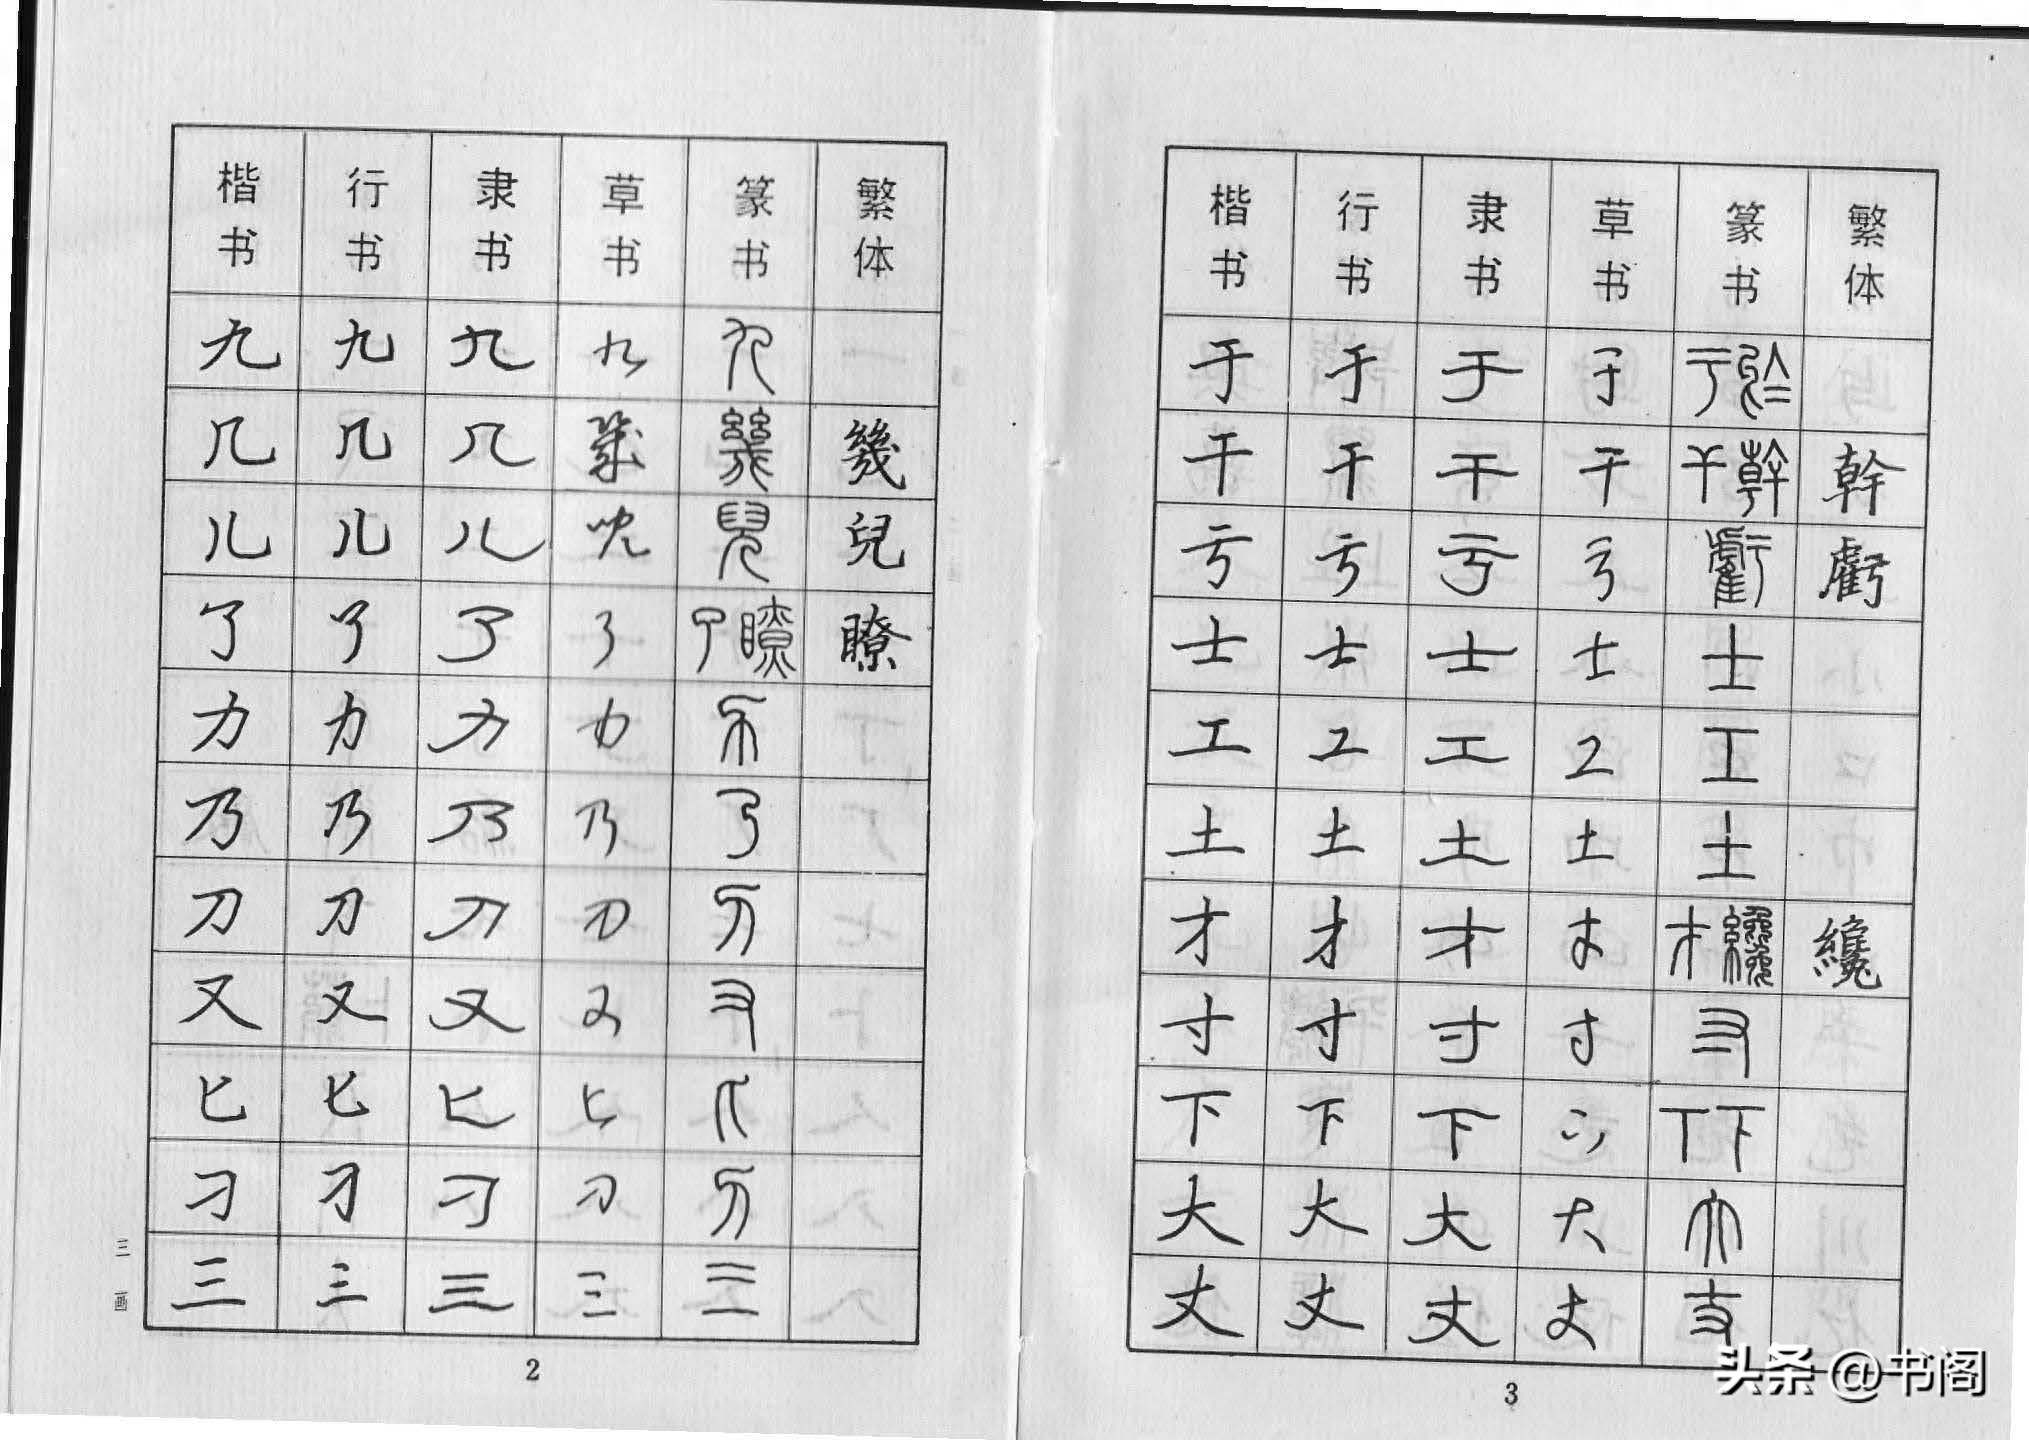 Comparison of the five styles of regular script, running script, cursive script, official script and seal script | Fountain pen copybook (September 1990 edition)